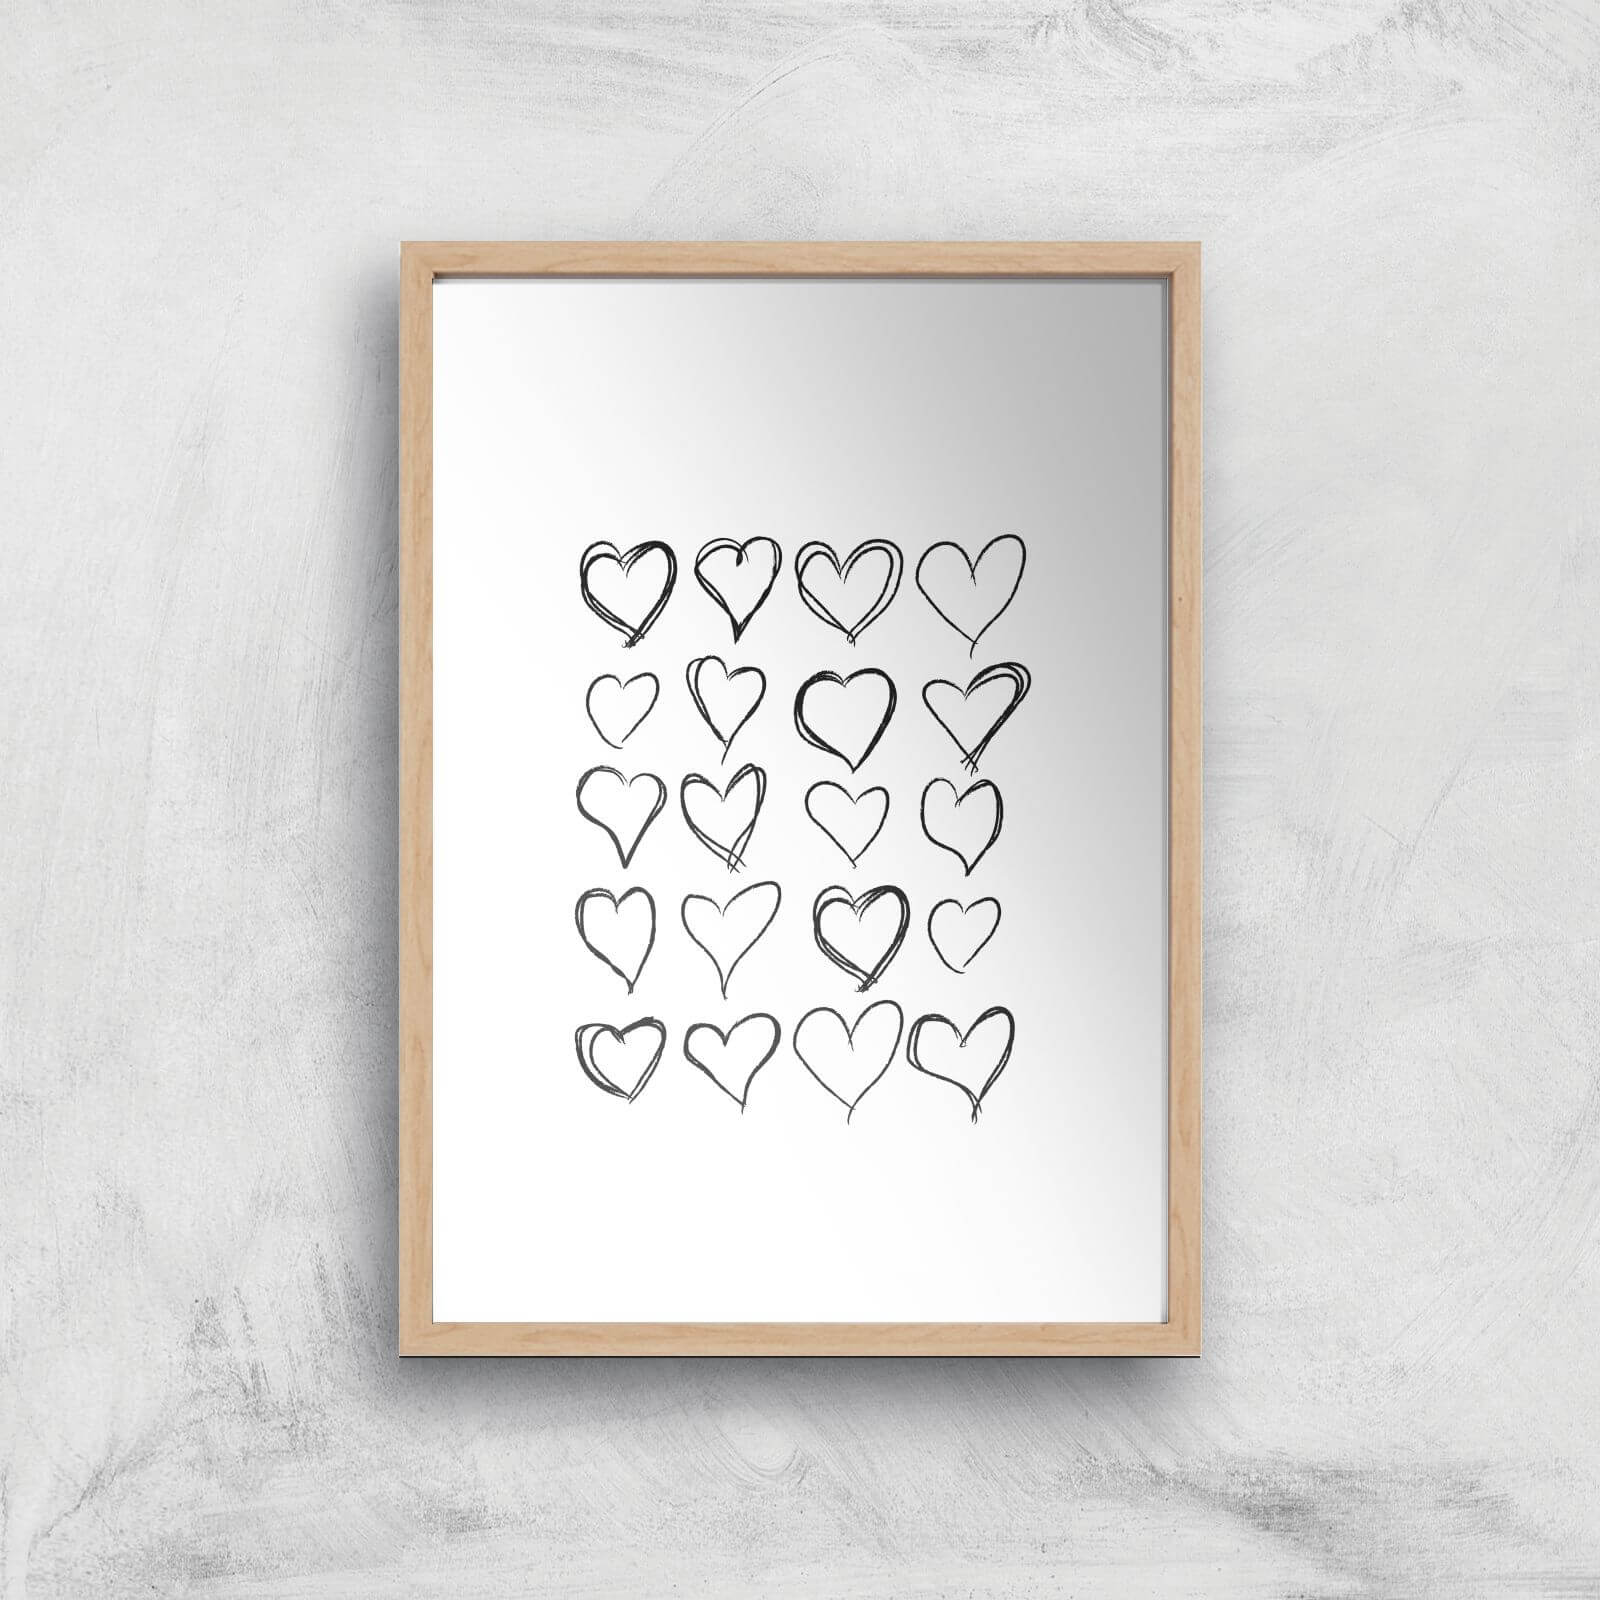 Love Hearts Giclee Art Print - A2 - Wooden Frame